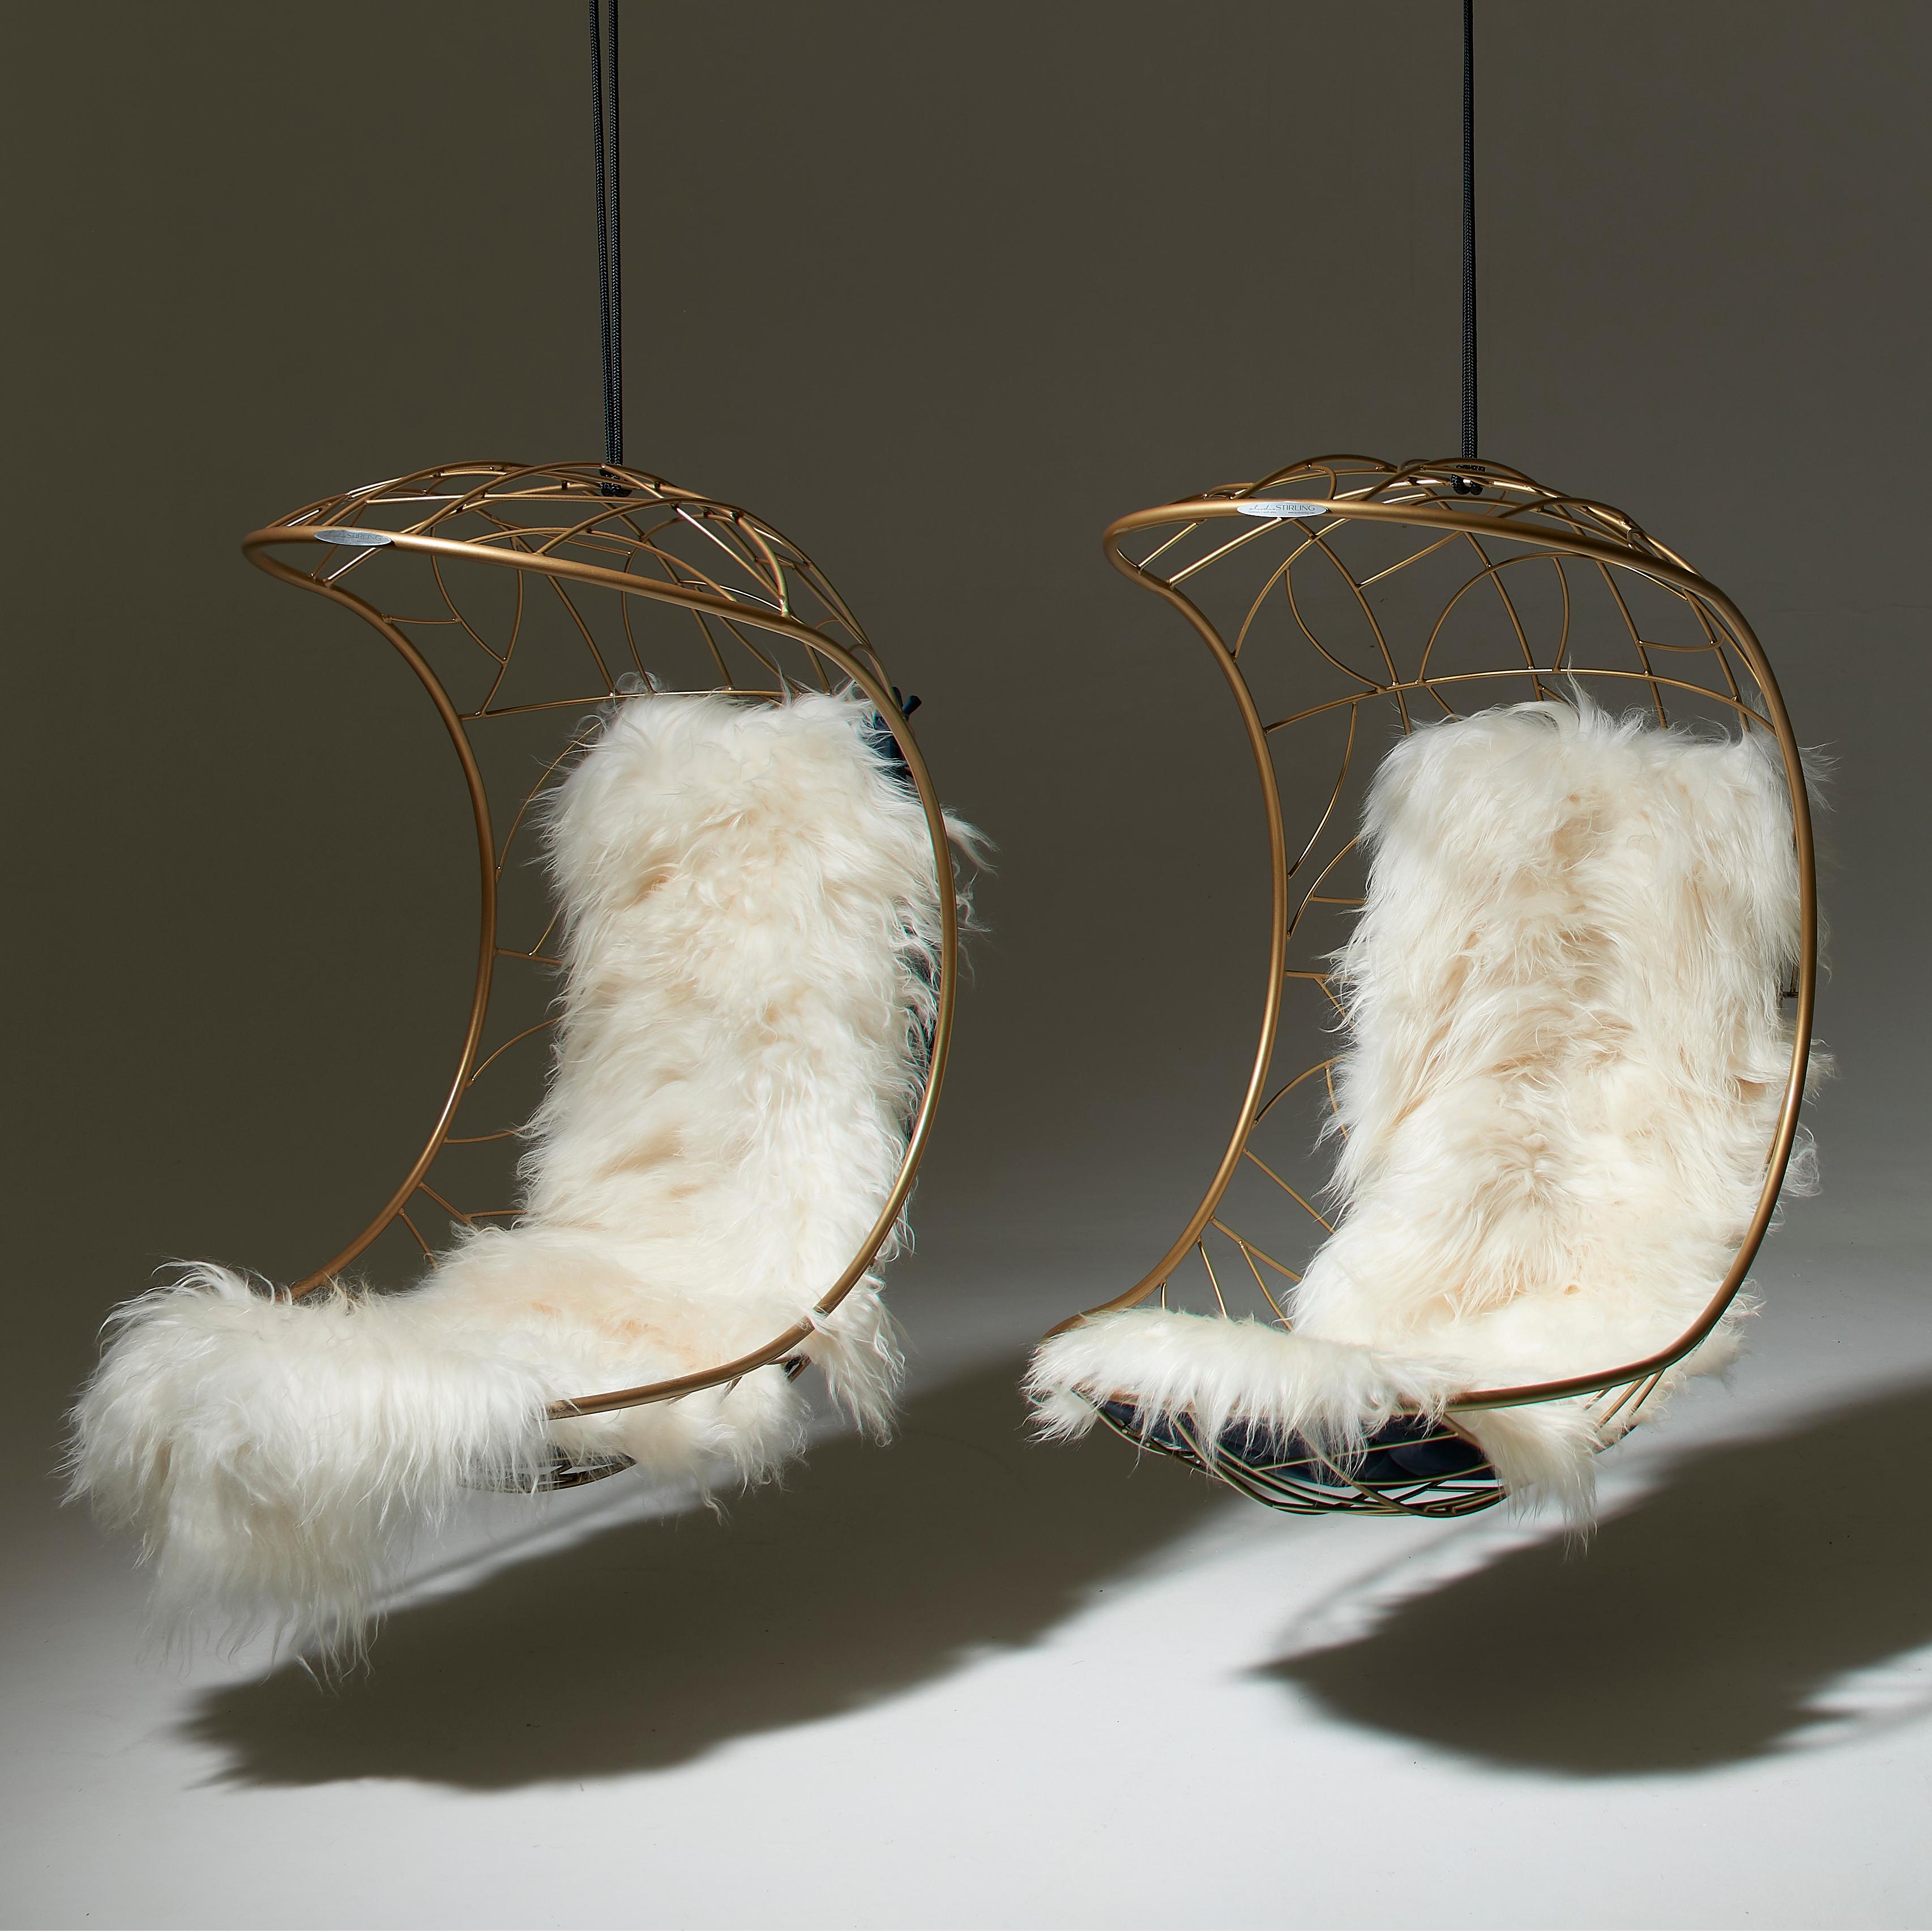 Modern Steel Nest Shaped Swing Chair For Sale 2